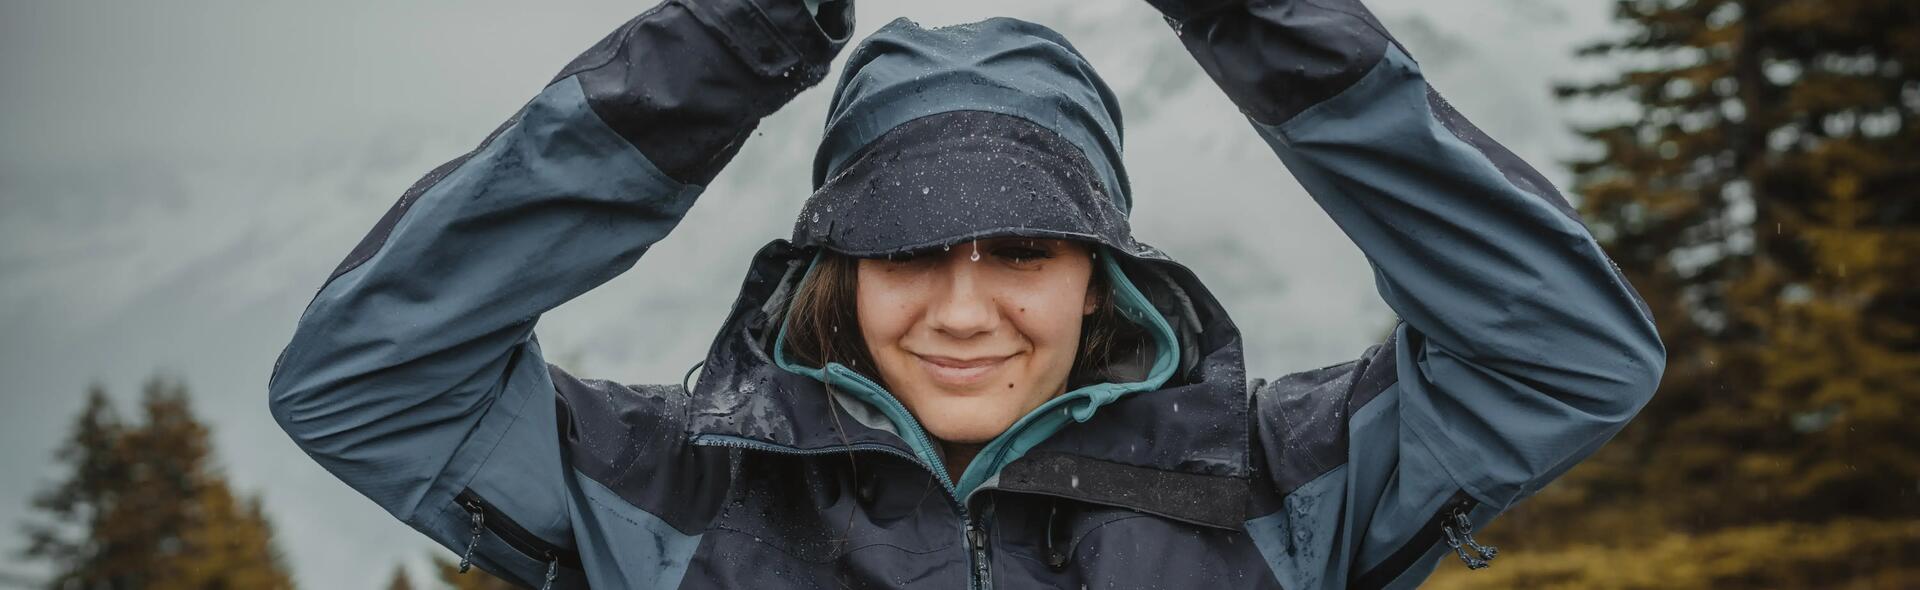 woman smiling in the rain wearing a rain jacket